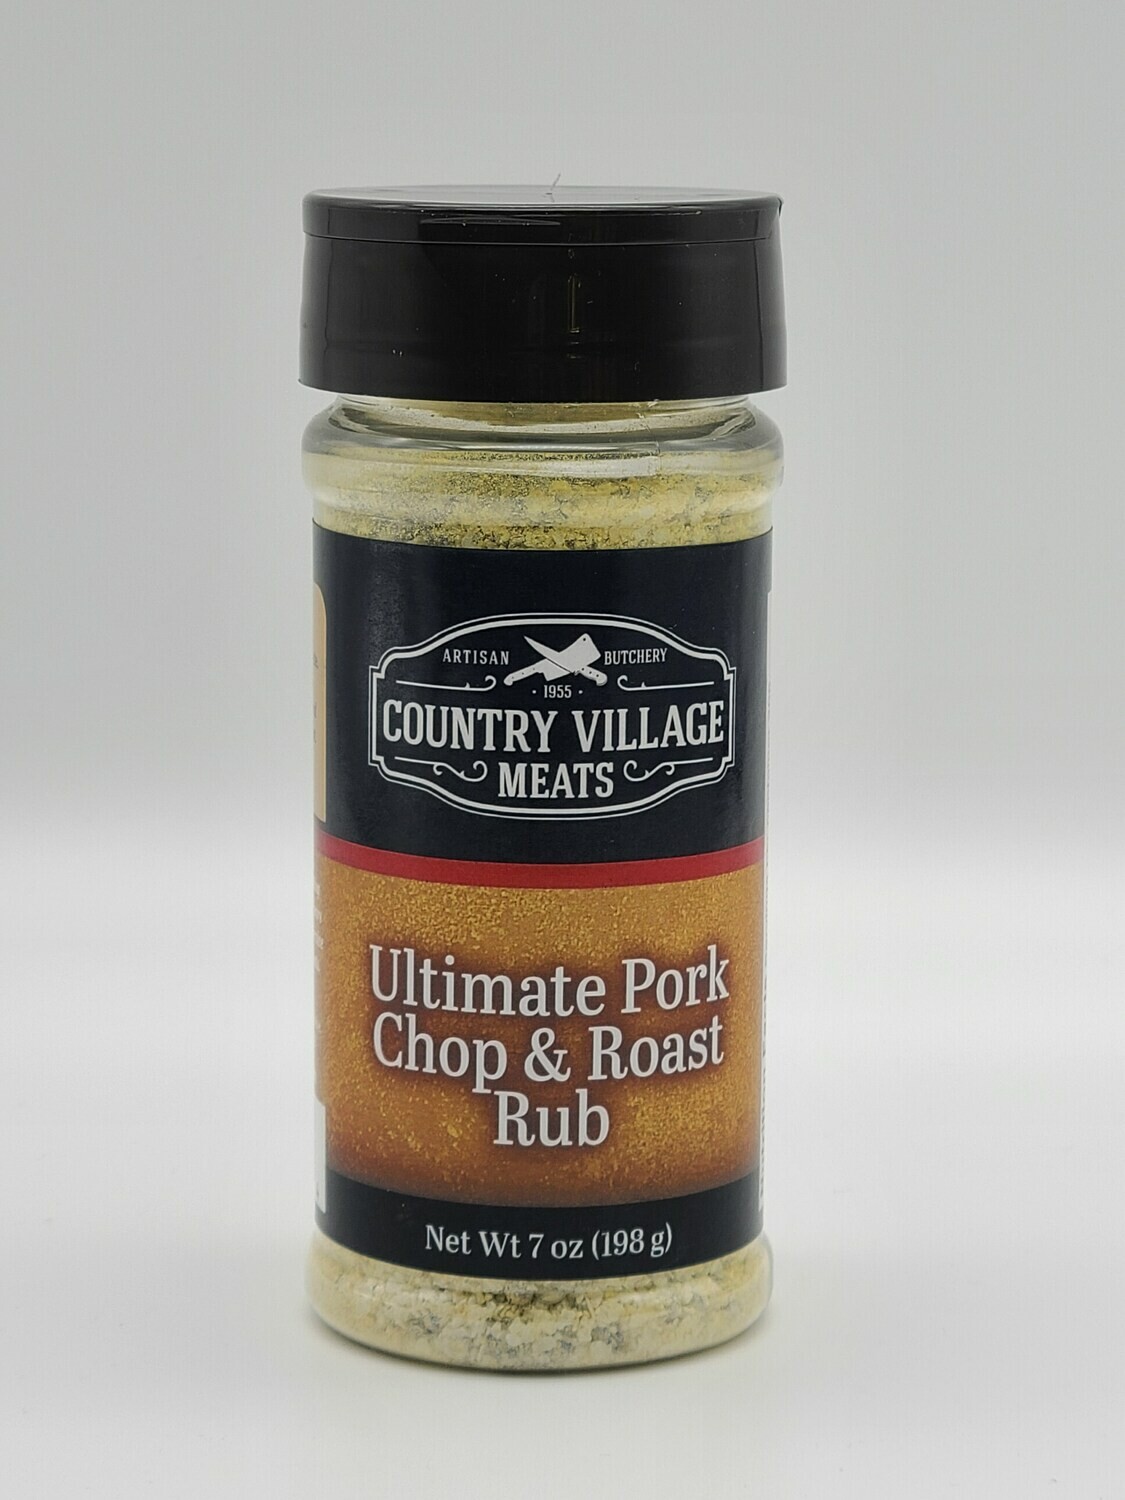 Country Village Meats - Ultimate Pork Chop & Roast Rub 7 oz.